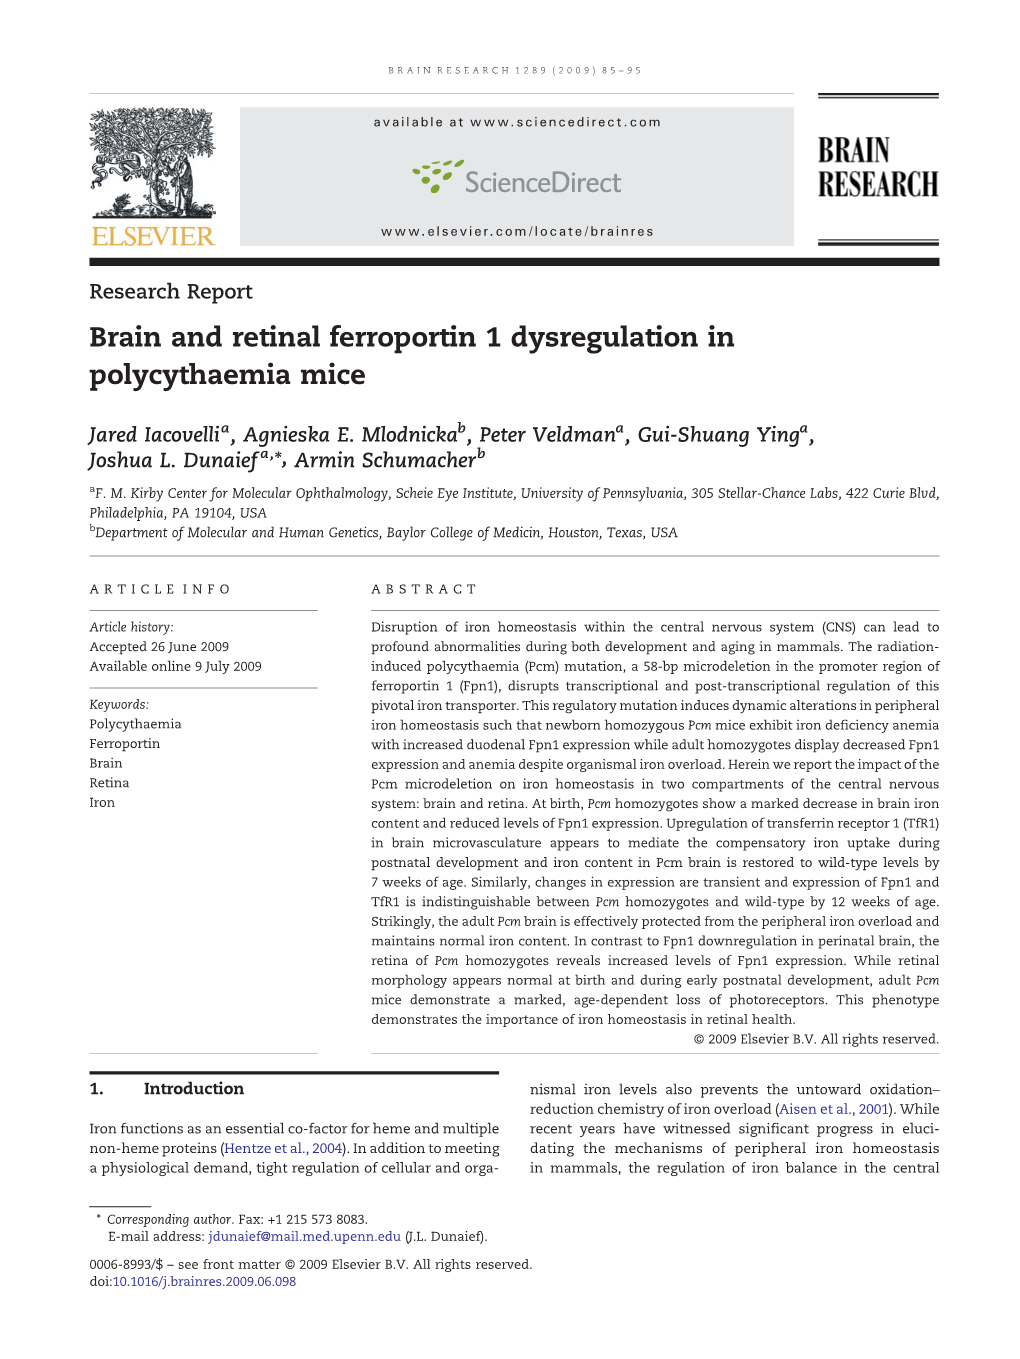 Brain and Retinal Ferroportin 1 Dysregulation in Polycythaemia Mice